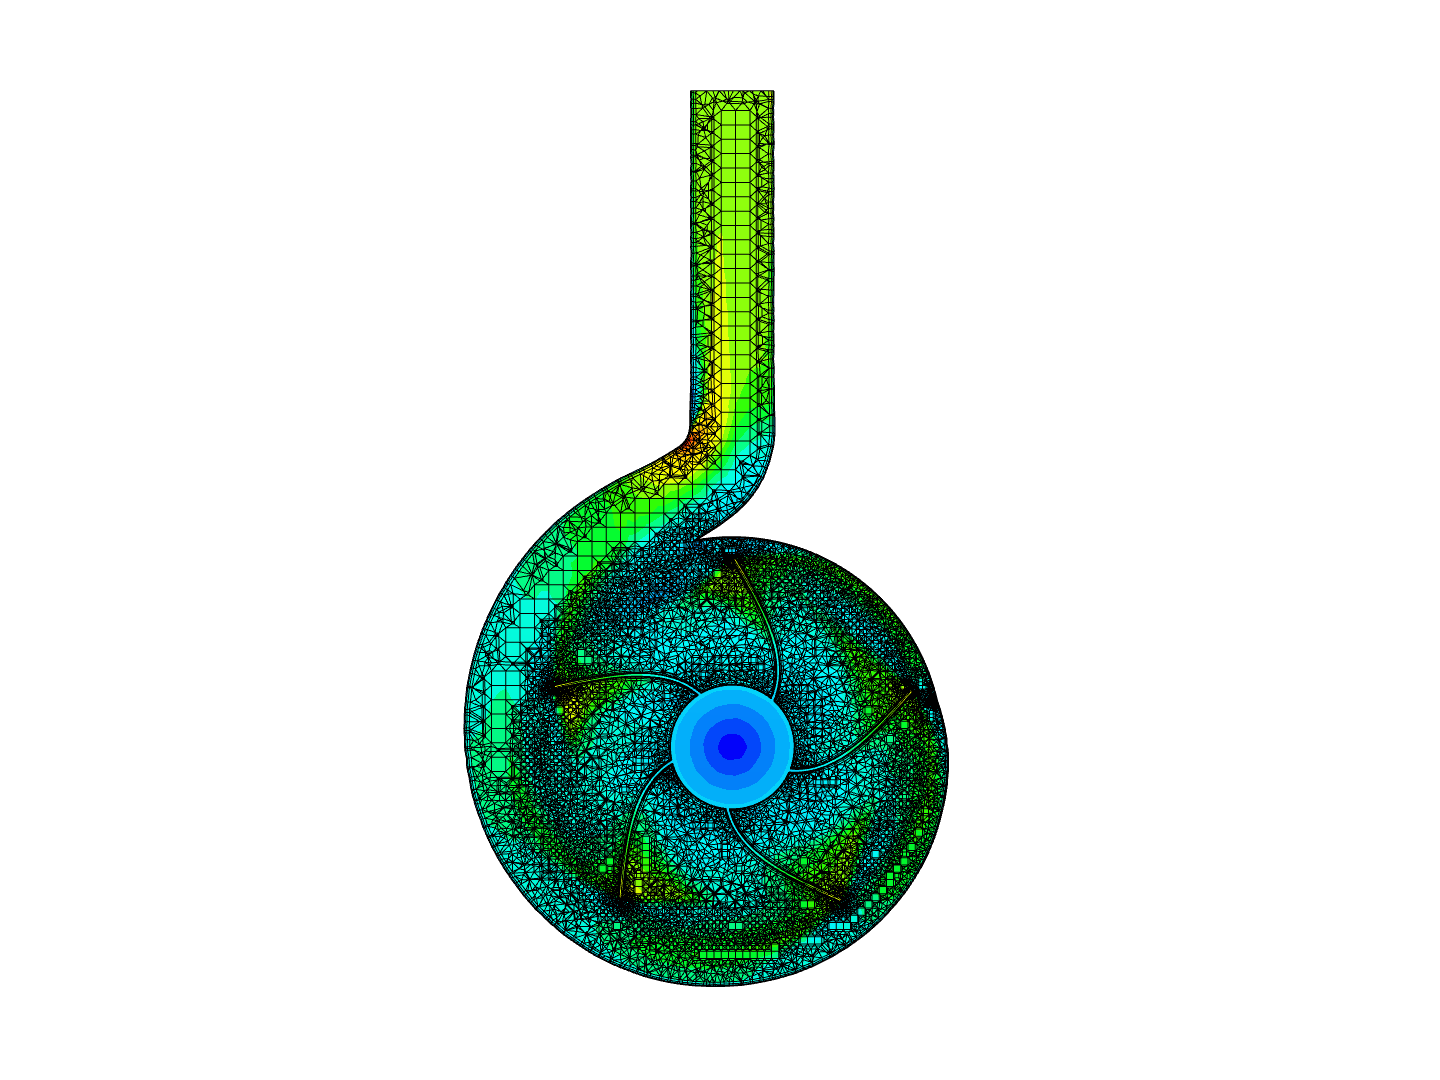 Centrifugal pump simulation image